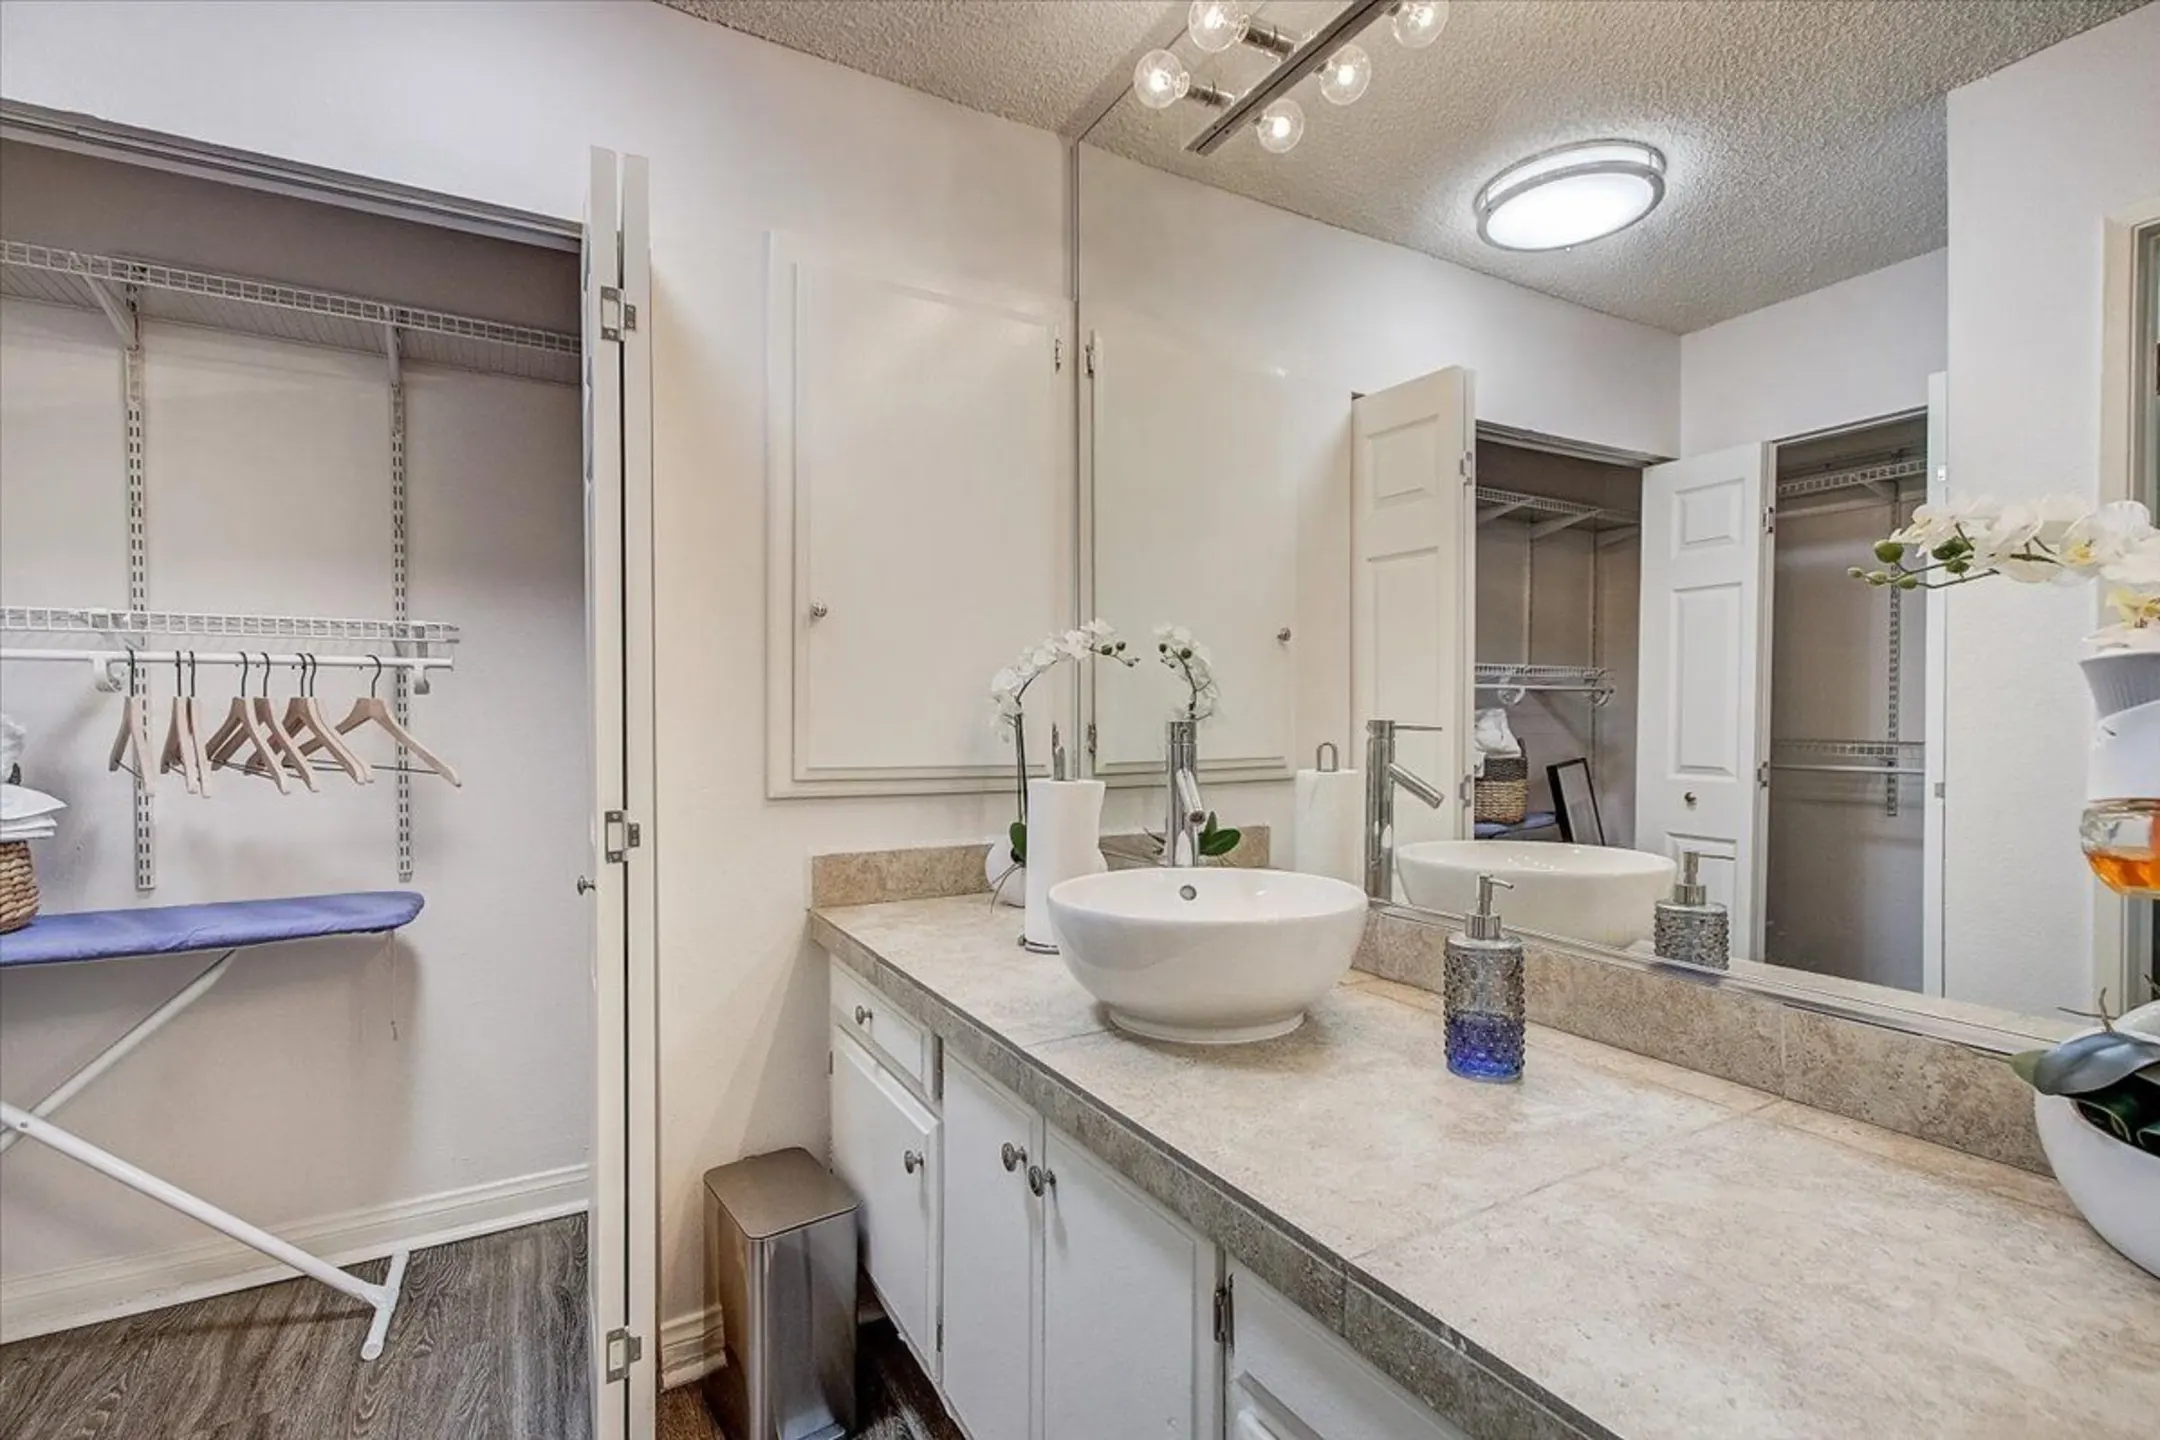 Bathroom - El Cordova Apartments - Carson, CA